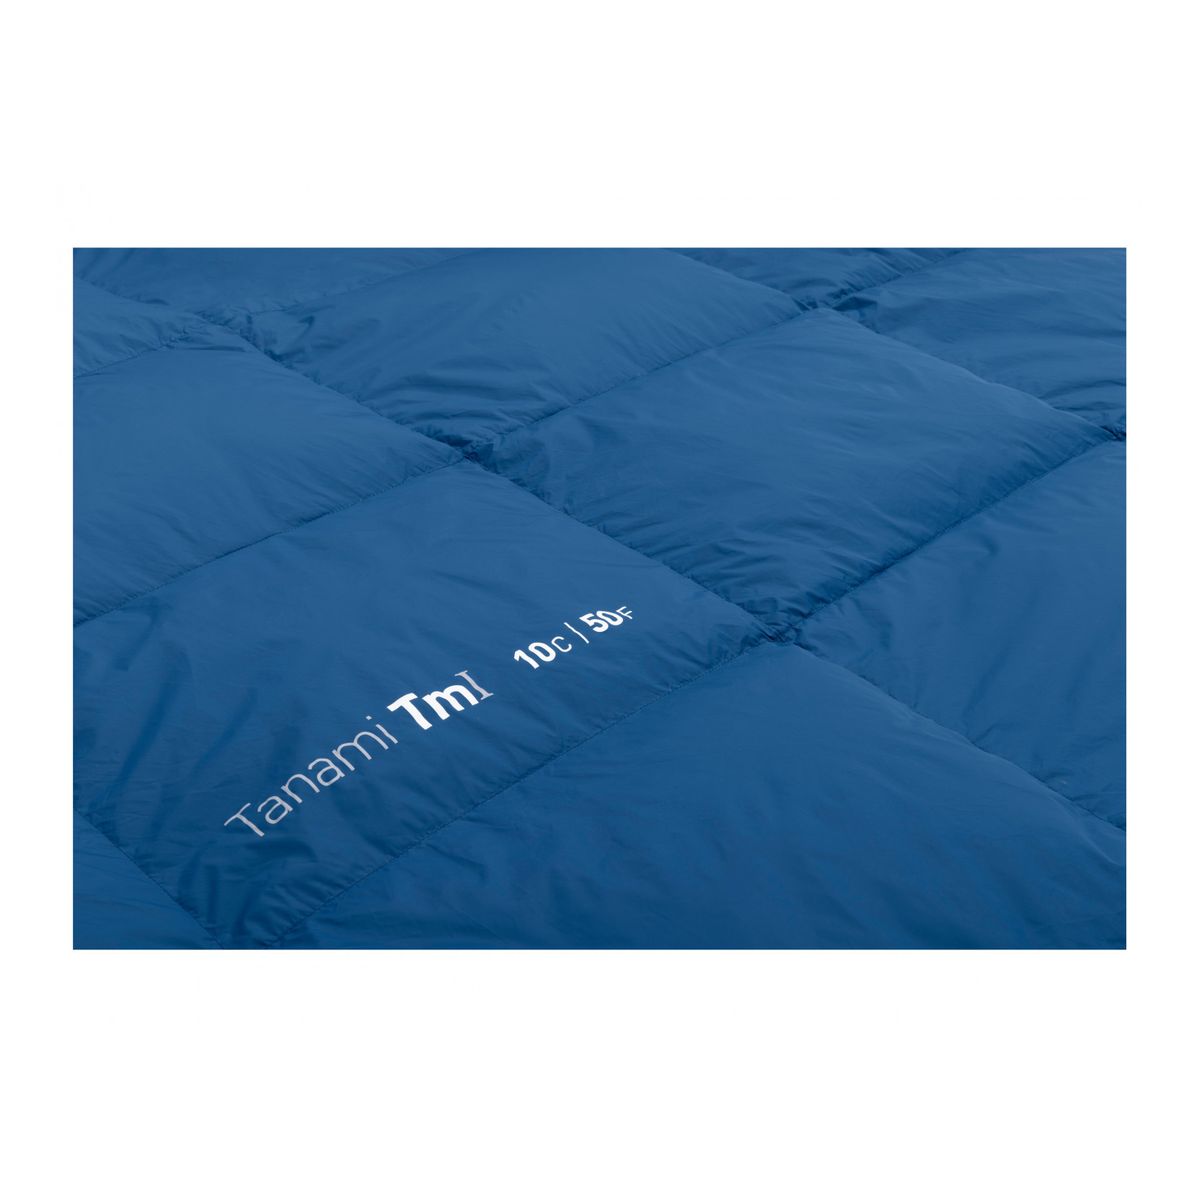 Sleepbag Down Tanami TM1 Double Quilt